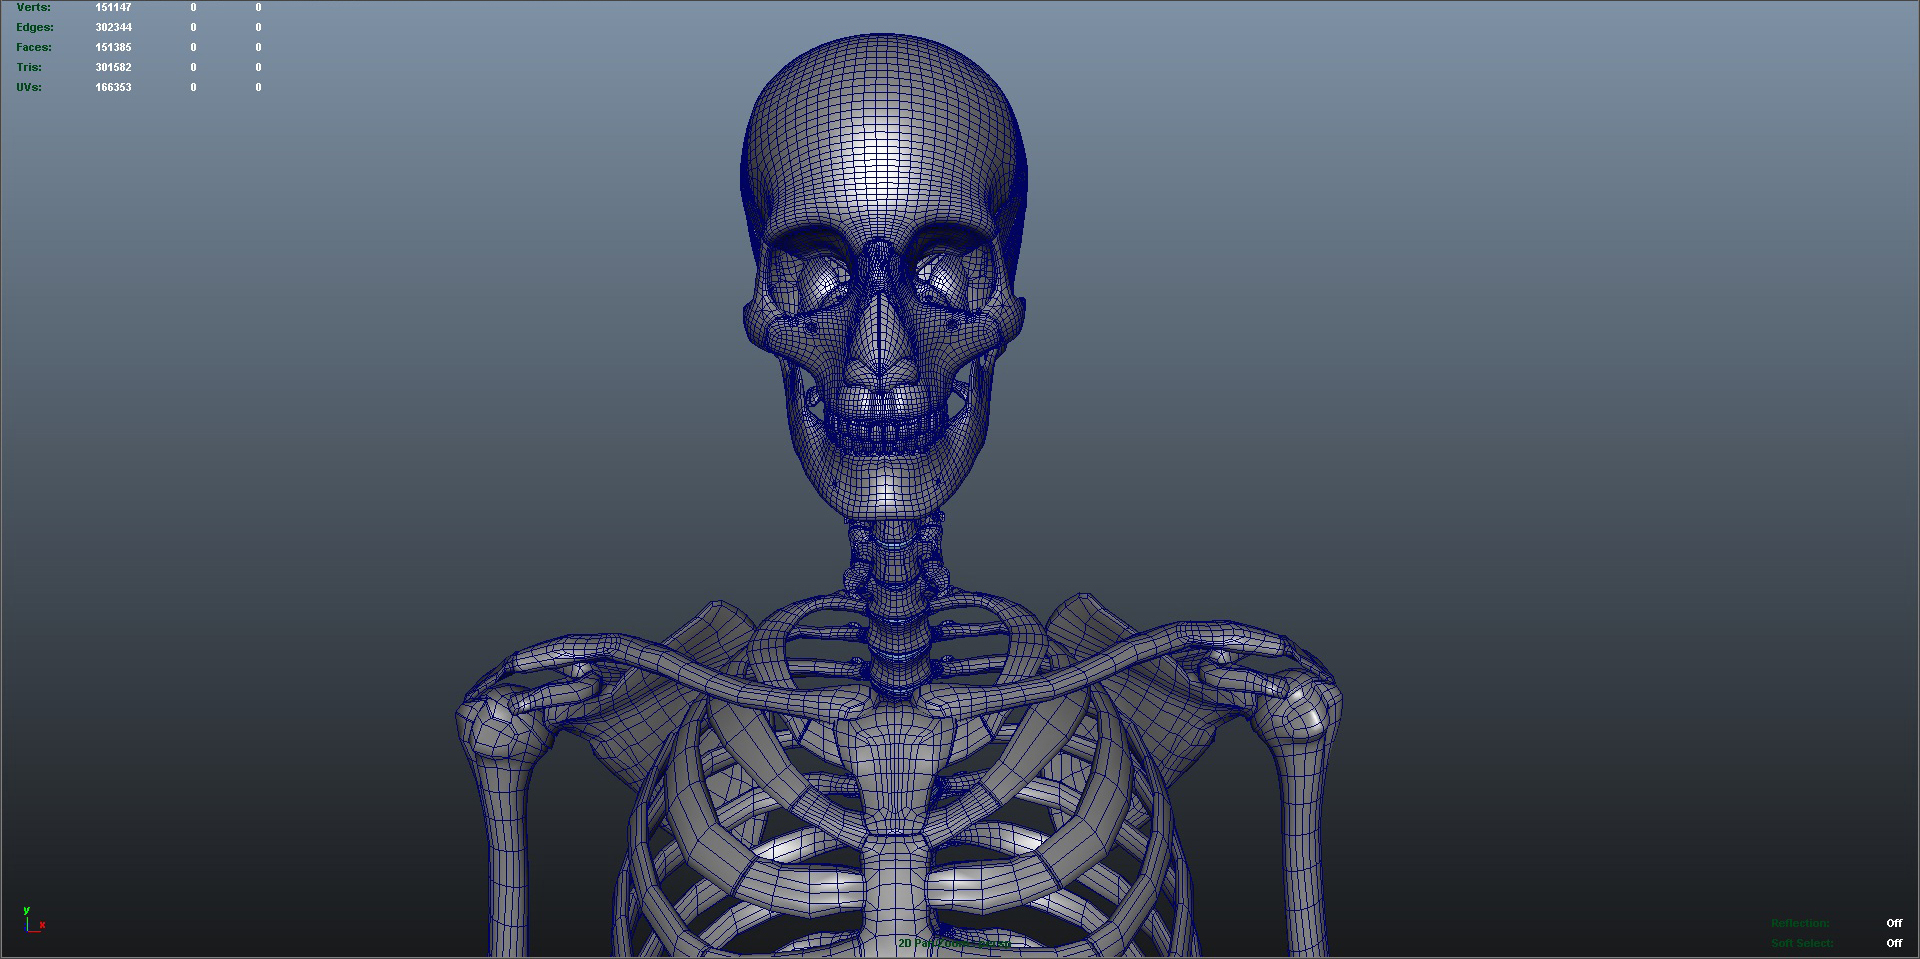 3d Human Skeleton Model